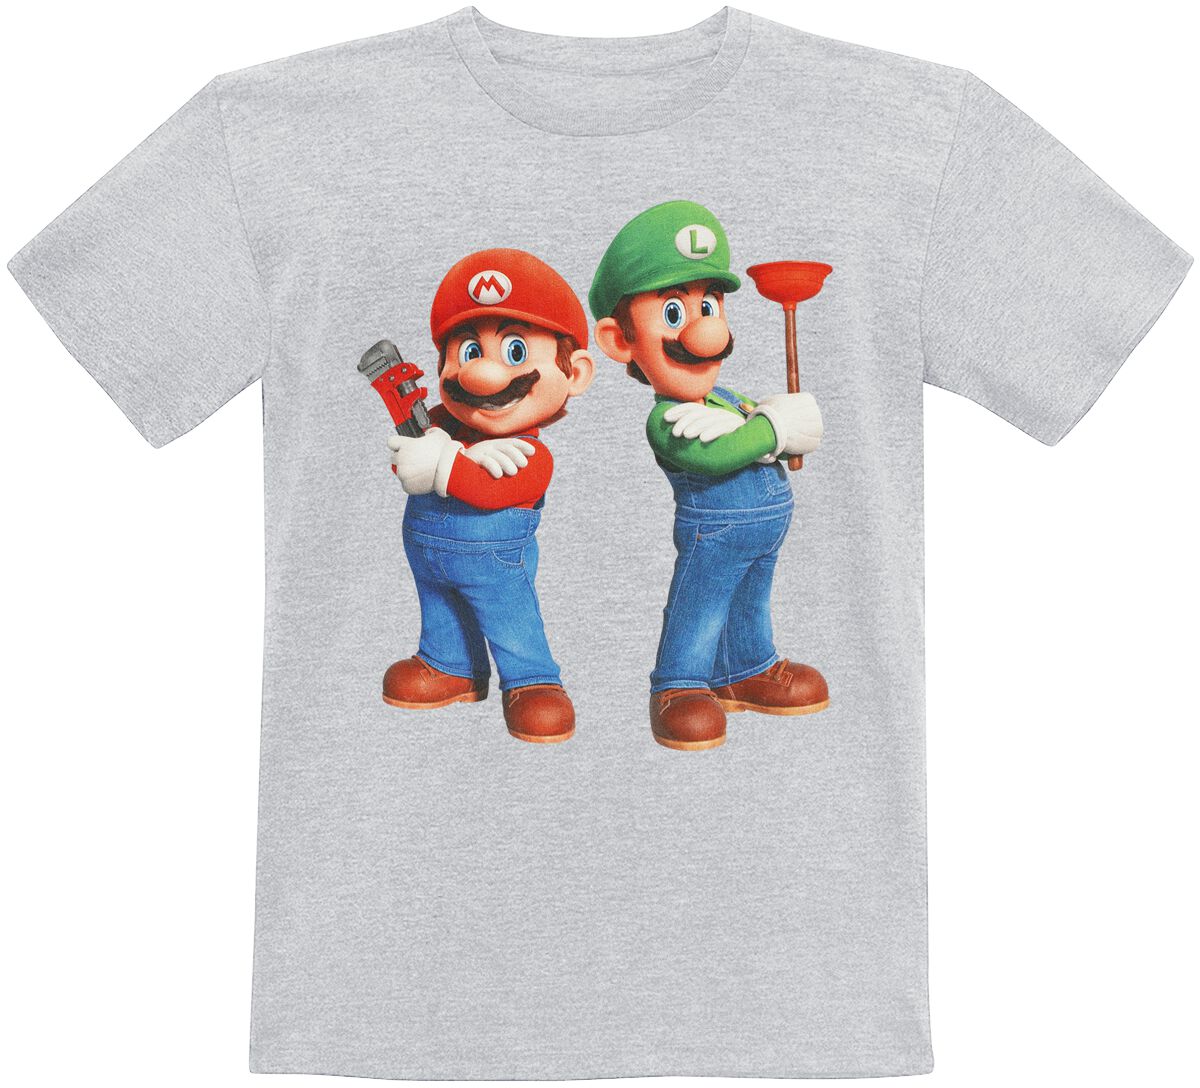 Super Mario Kids - Plumbing Bros. T-Shirt grau in 104